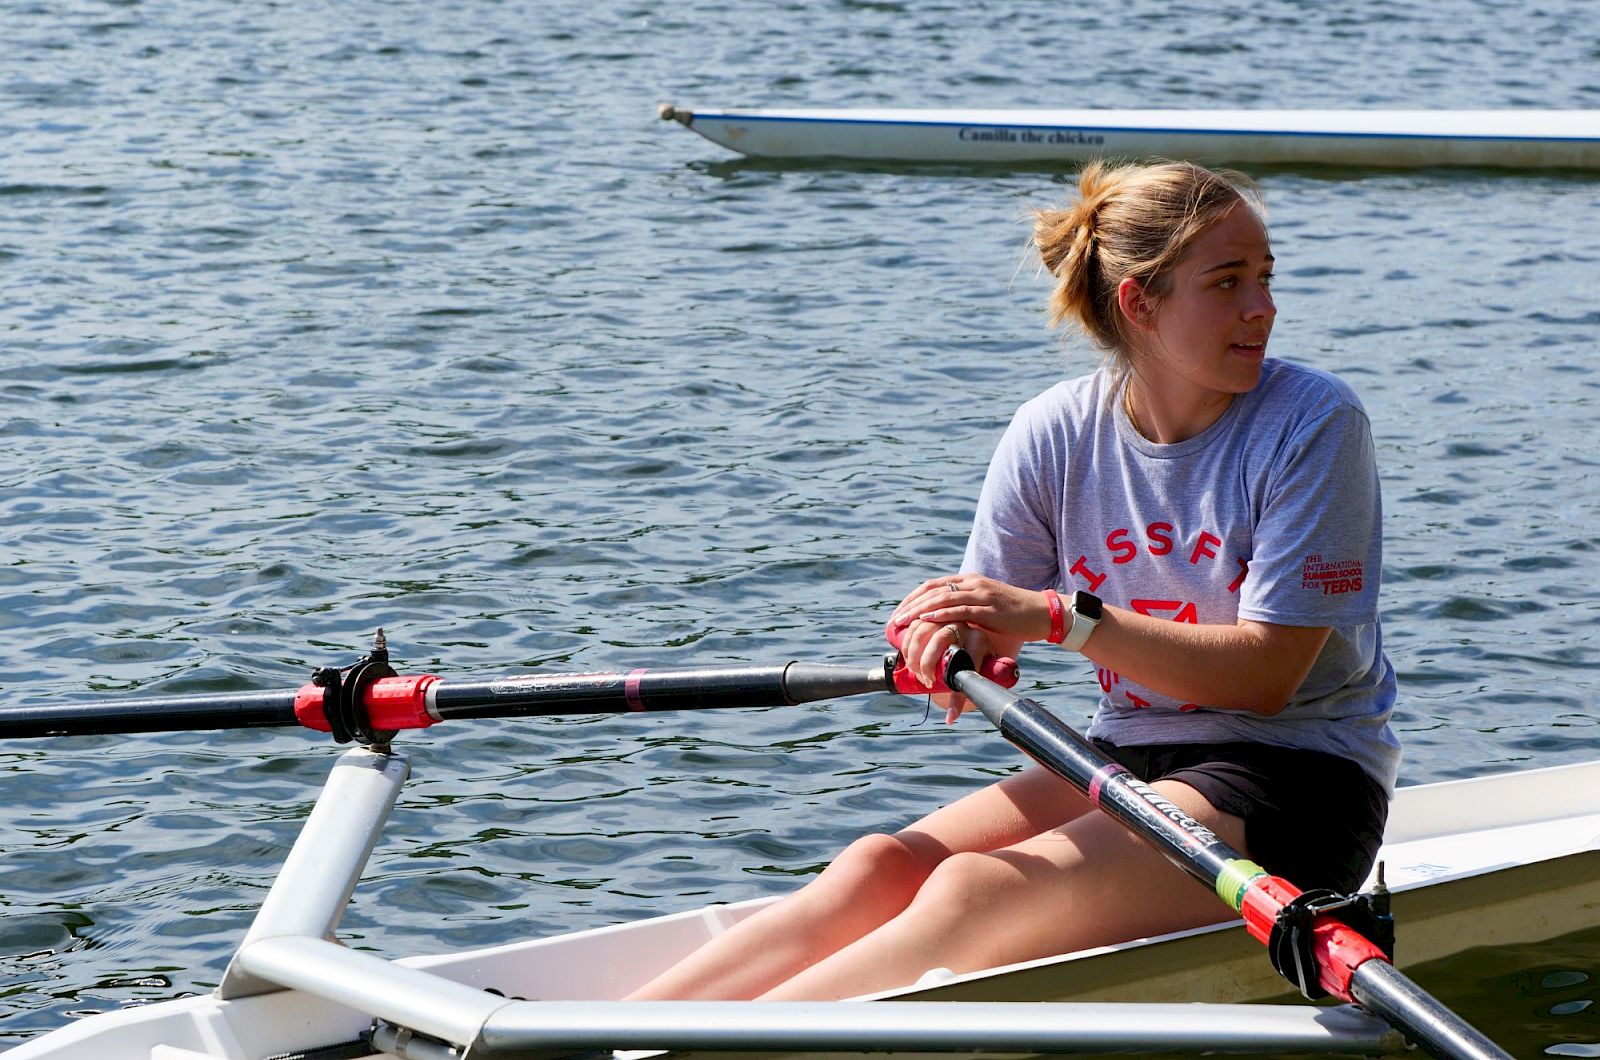 ISSFT summer school student rowing